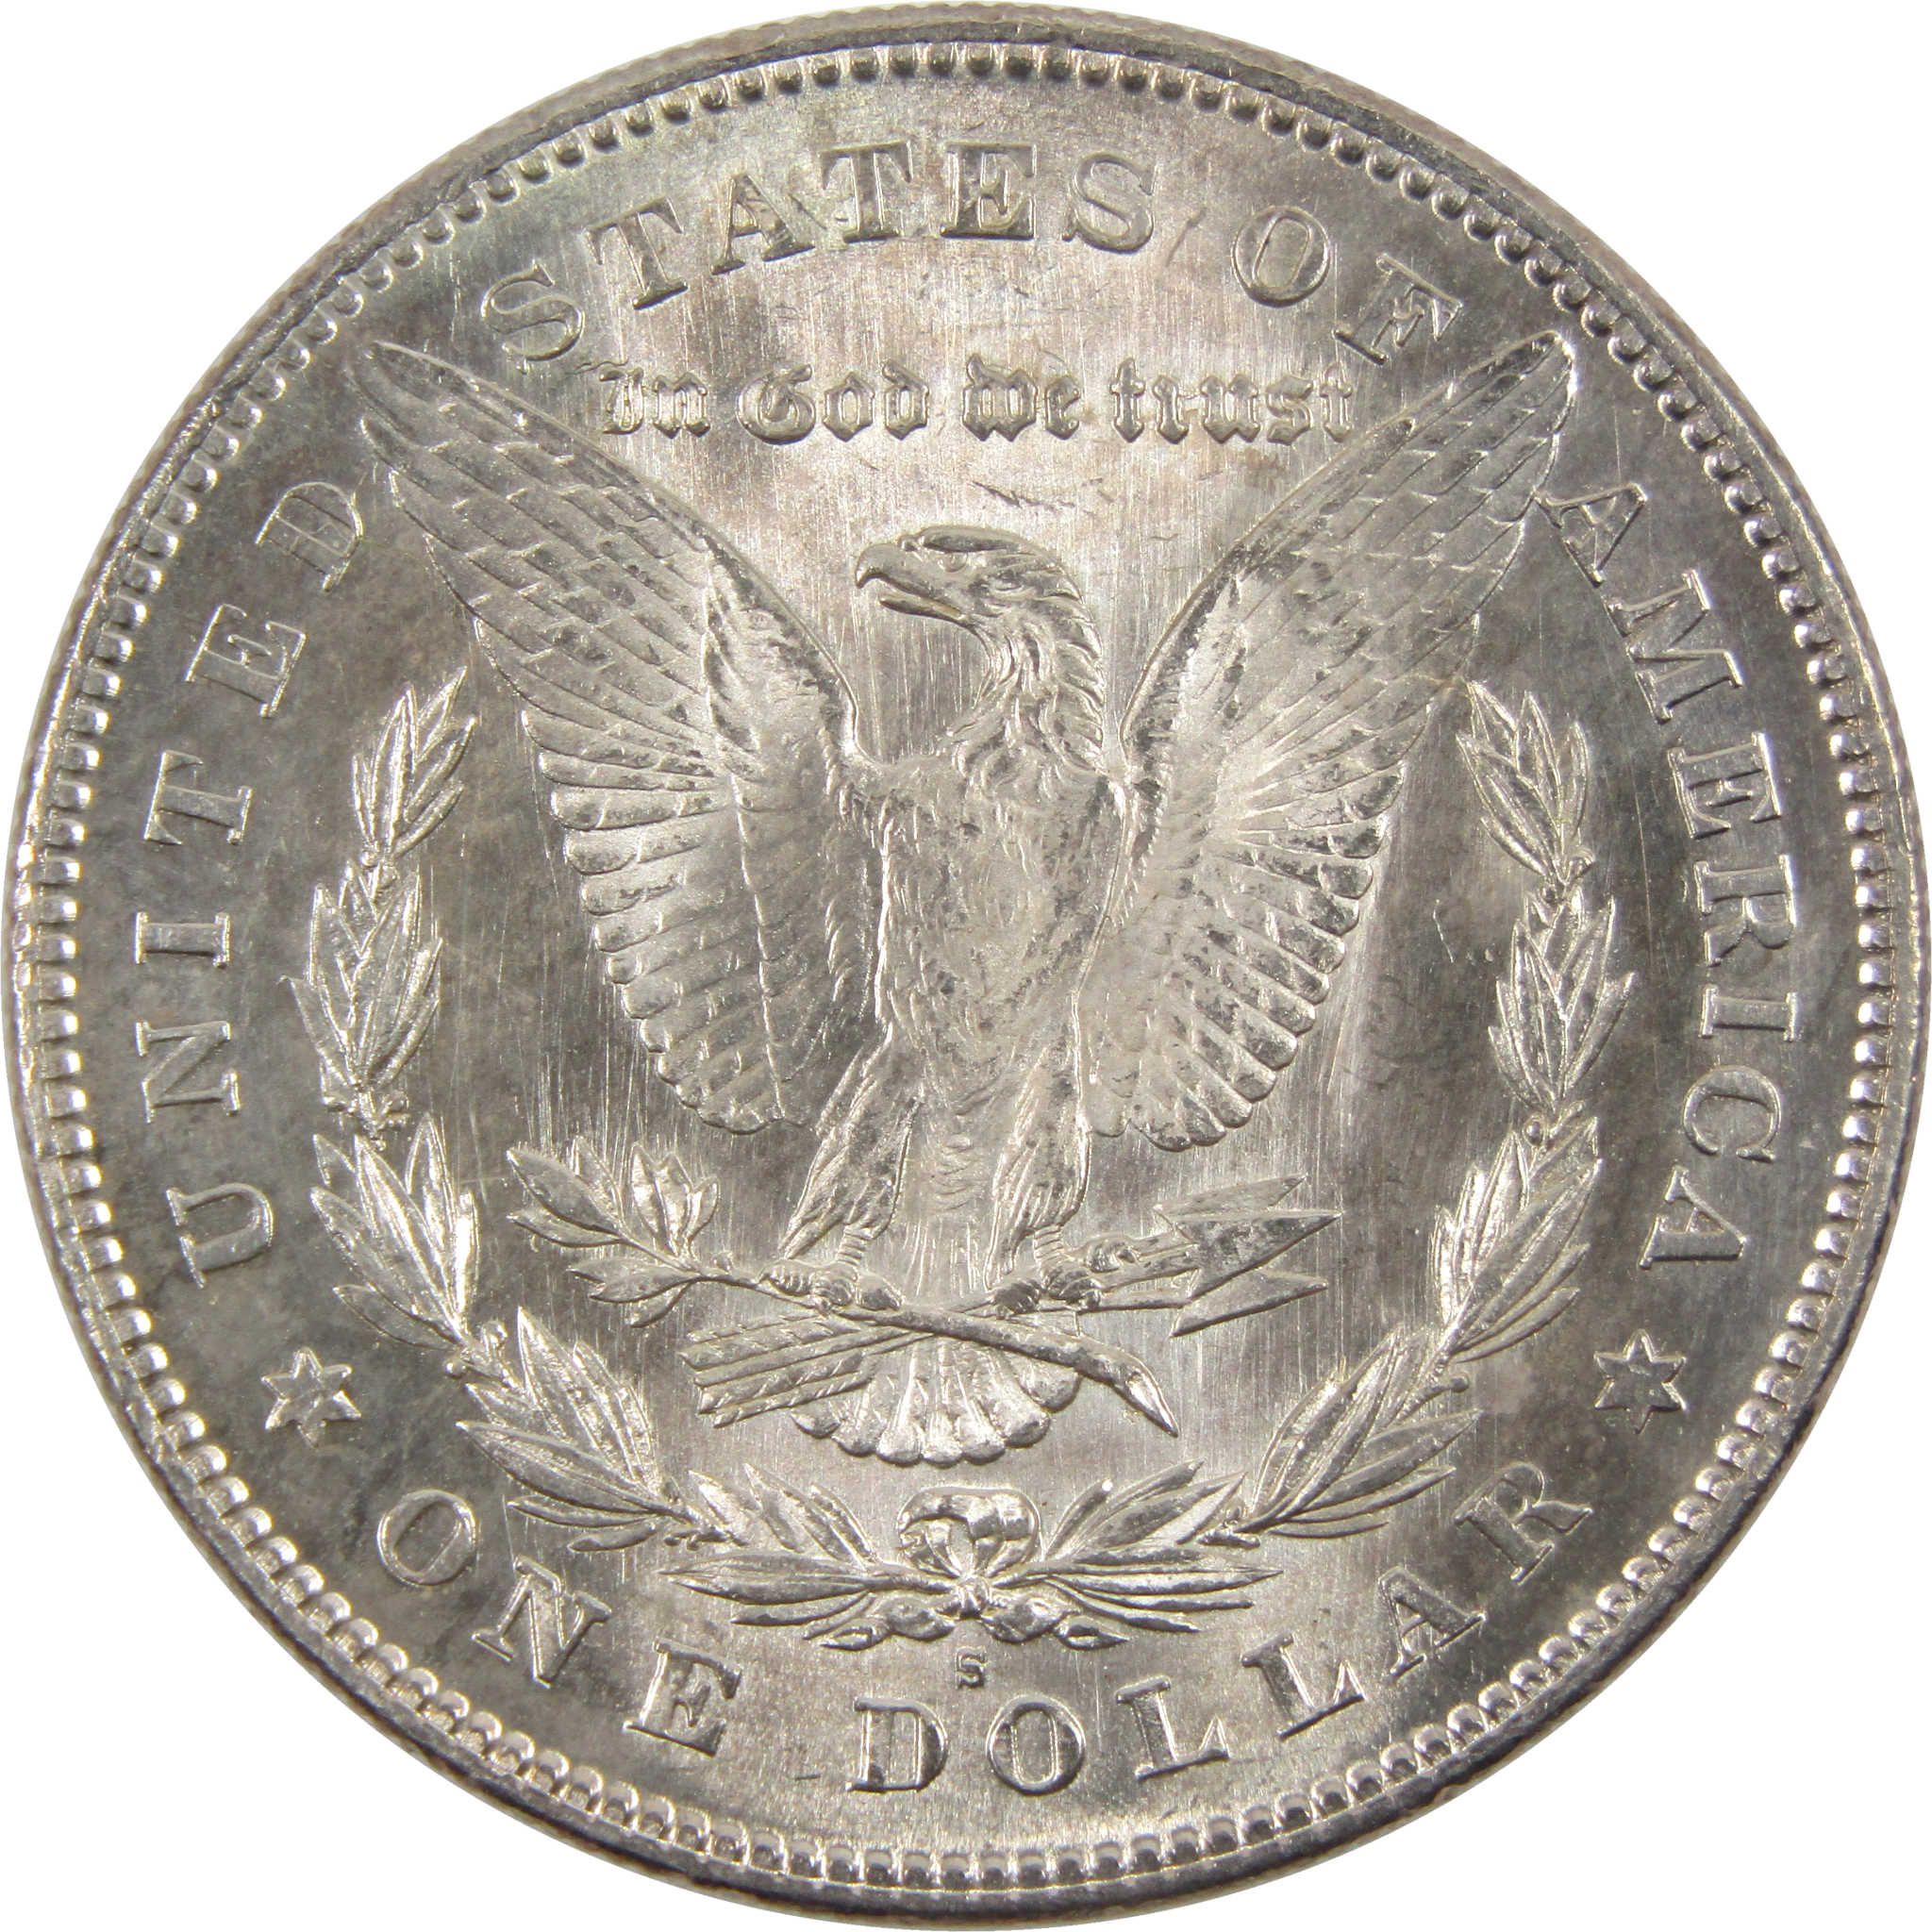 1878 S Morgan Dollar BU Choice Uncirculated 90% Silver $1 SKU:I7629 - Morgan coin - Morgan silver dollar - Morgan silver dollar for sale - Profile Coins &amp; Collectibles